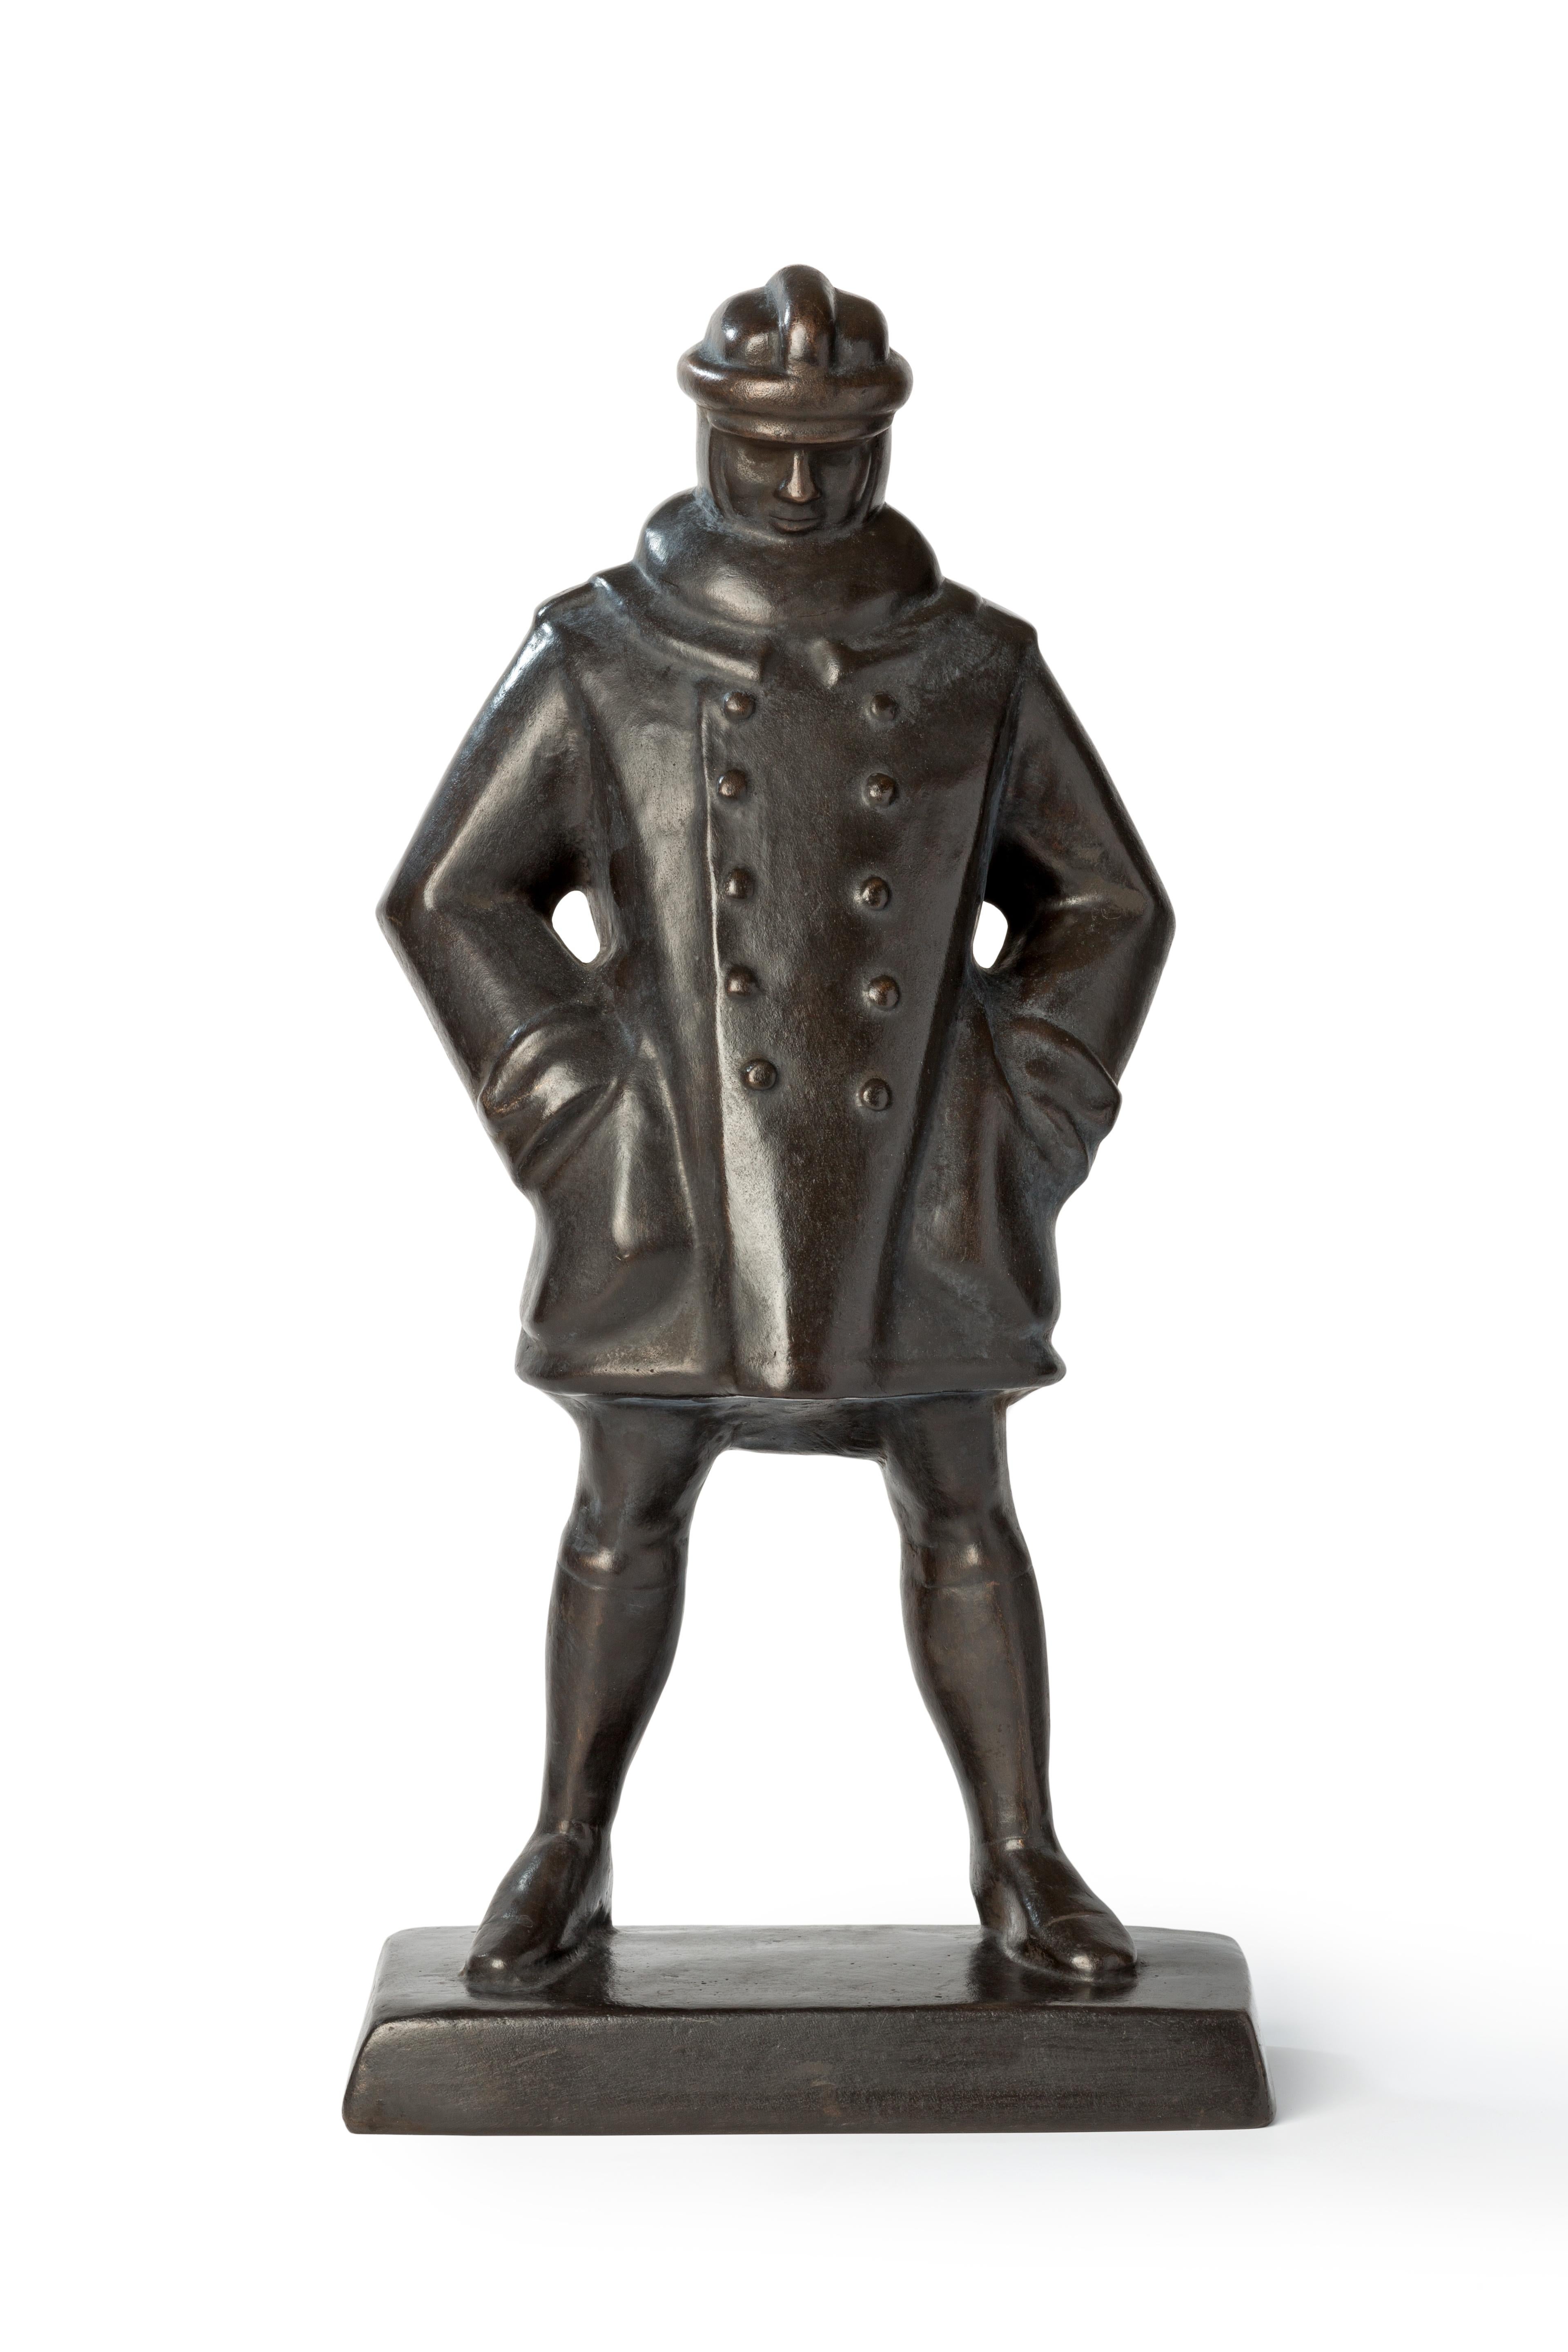 Rudolf Belling Figurative Sculpture – Rudolf Glockenbronze-Statuette des Aviatoren, 1917